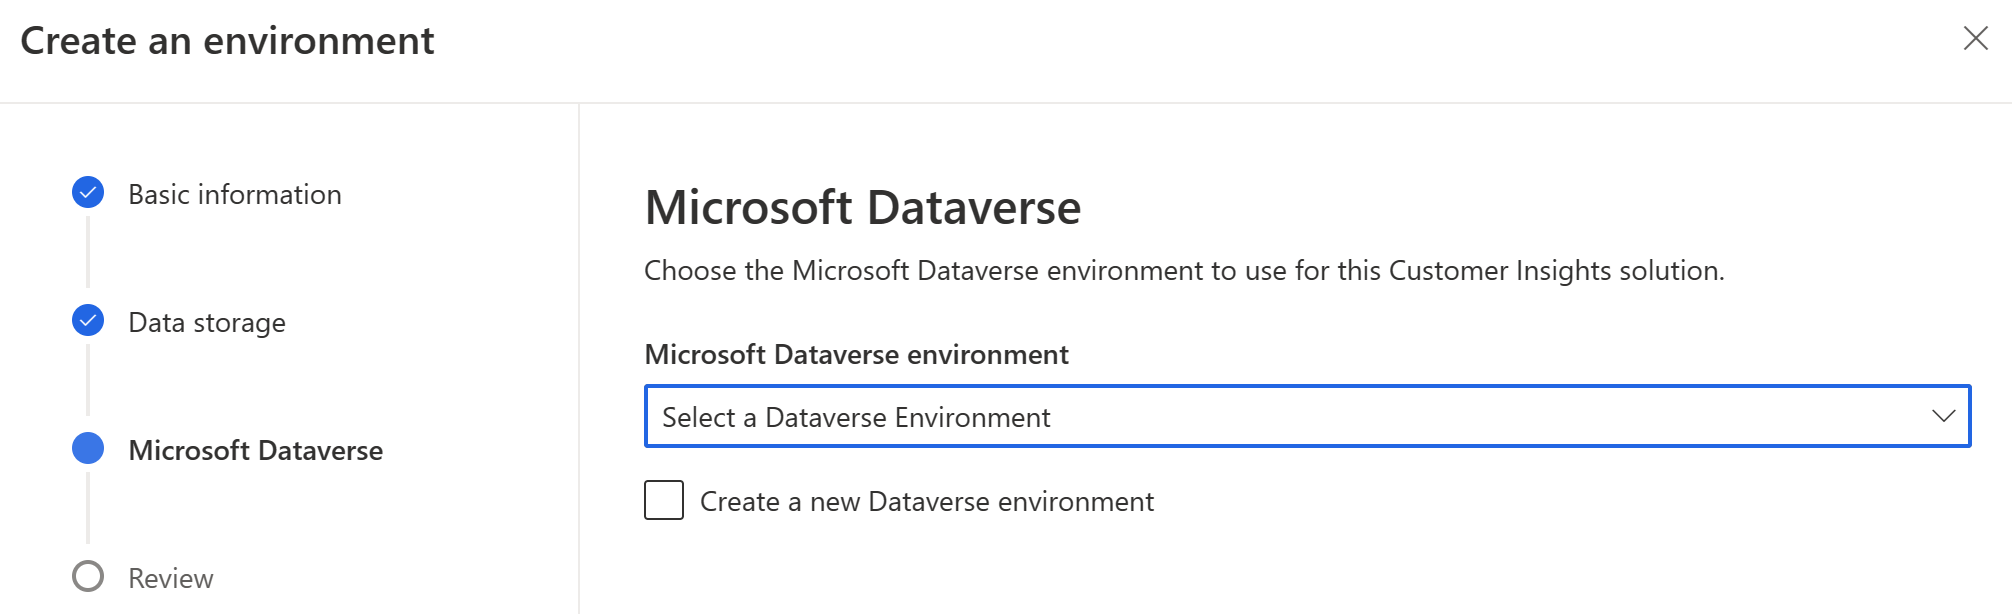 Microsoft Dataverse와의 데이터 공유는 새로운 환경에서 자동으로 활성화됩니다.